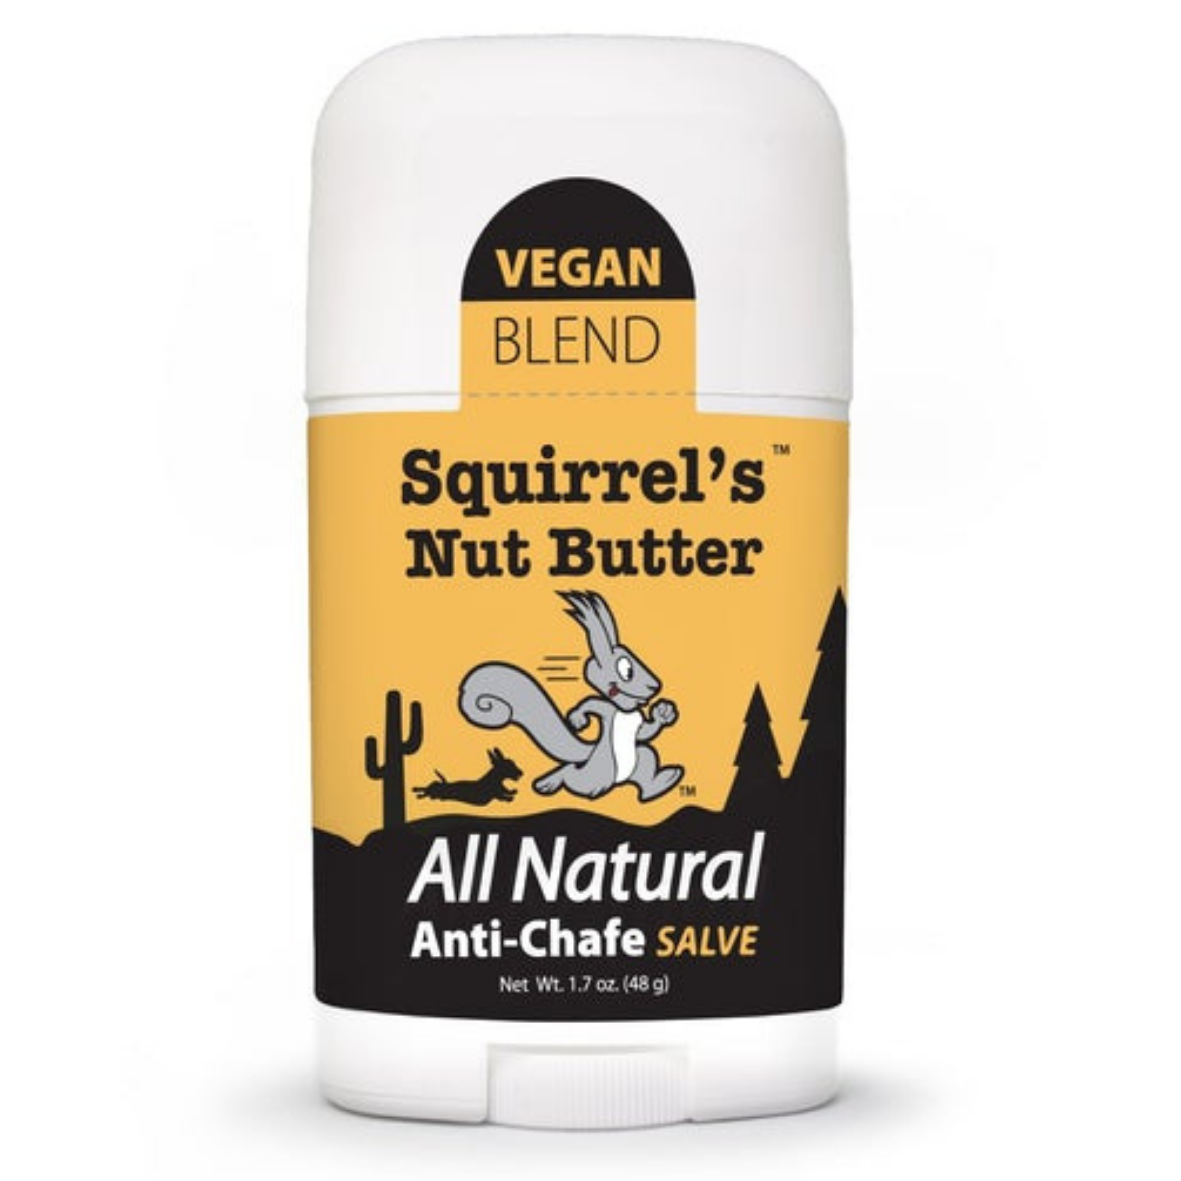 Squirrel's Nut Butter - Vegan Anti-Chafe